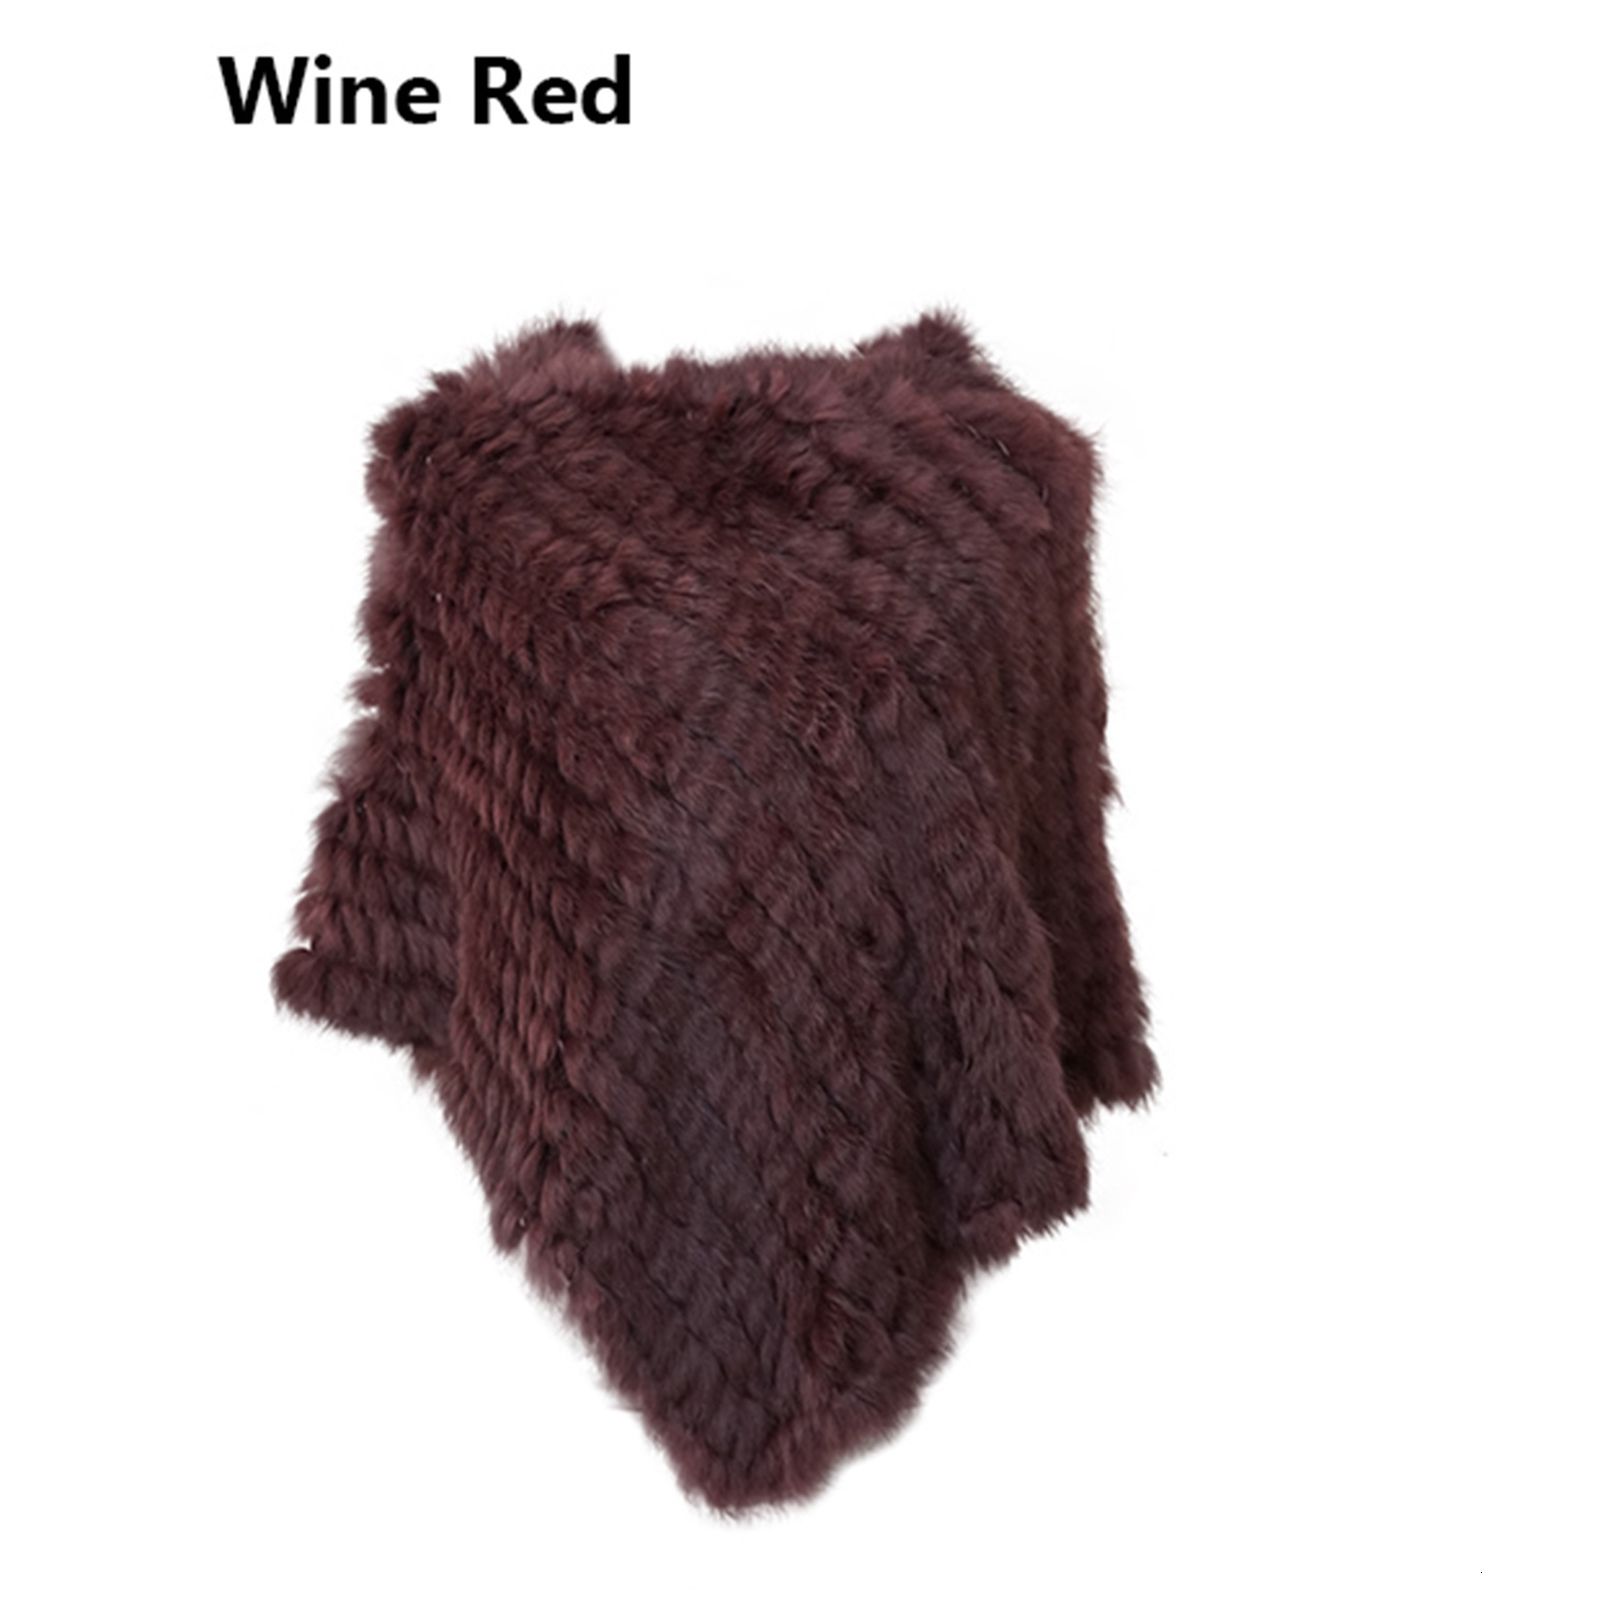 wine red